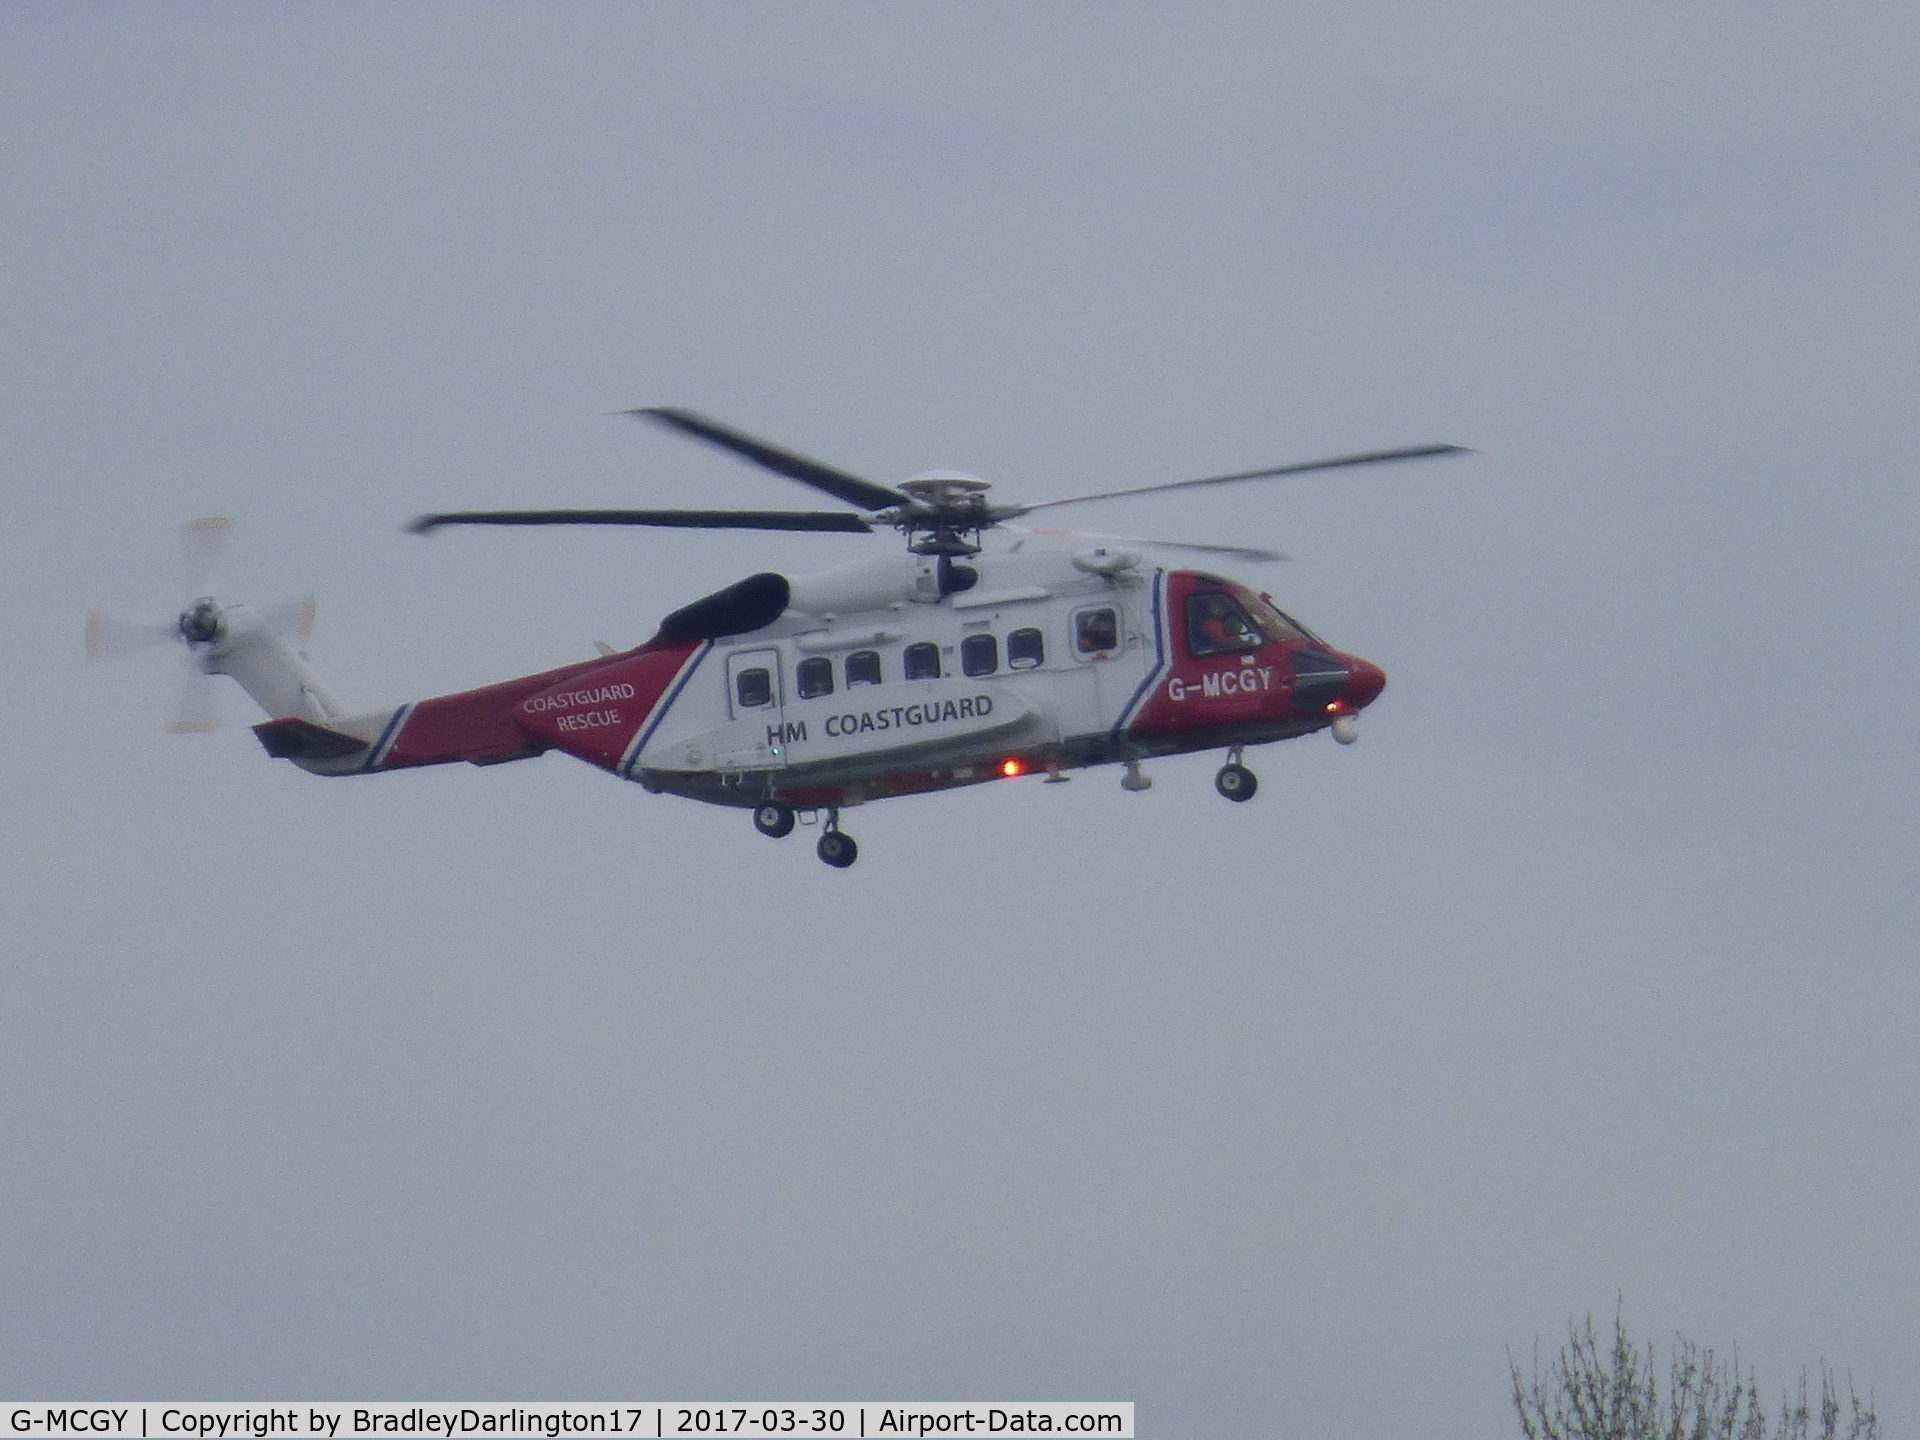 G-MCGY, 2014 Sikorsky S-92A C/N 920257, H&M Coastguard landing at derriford